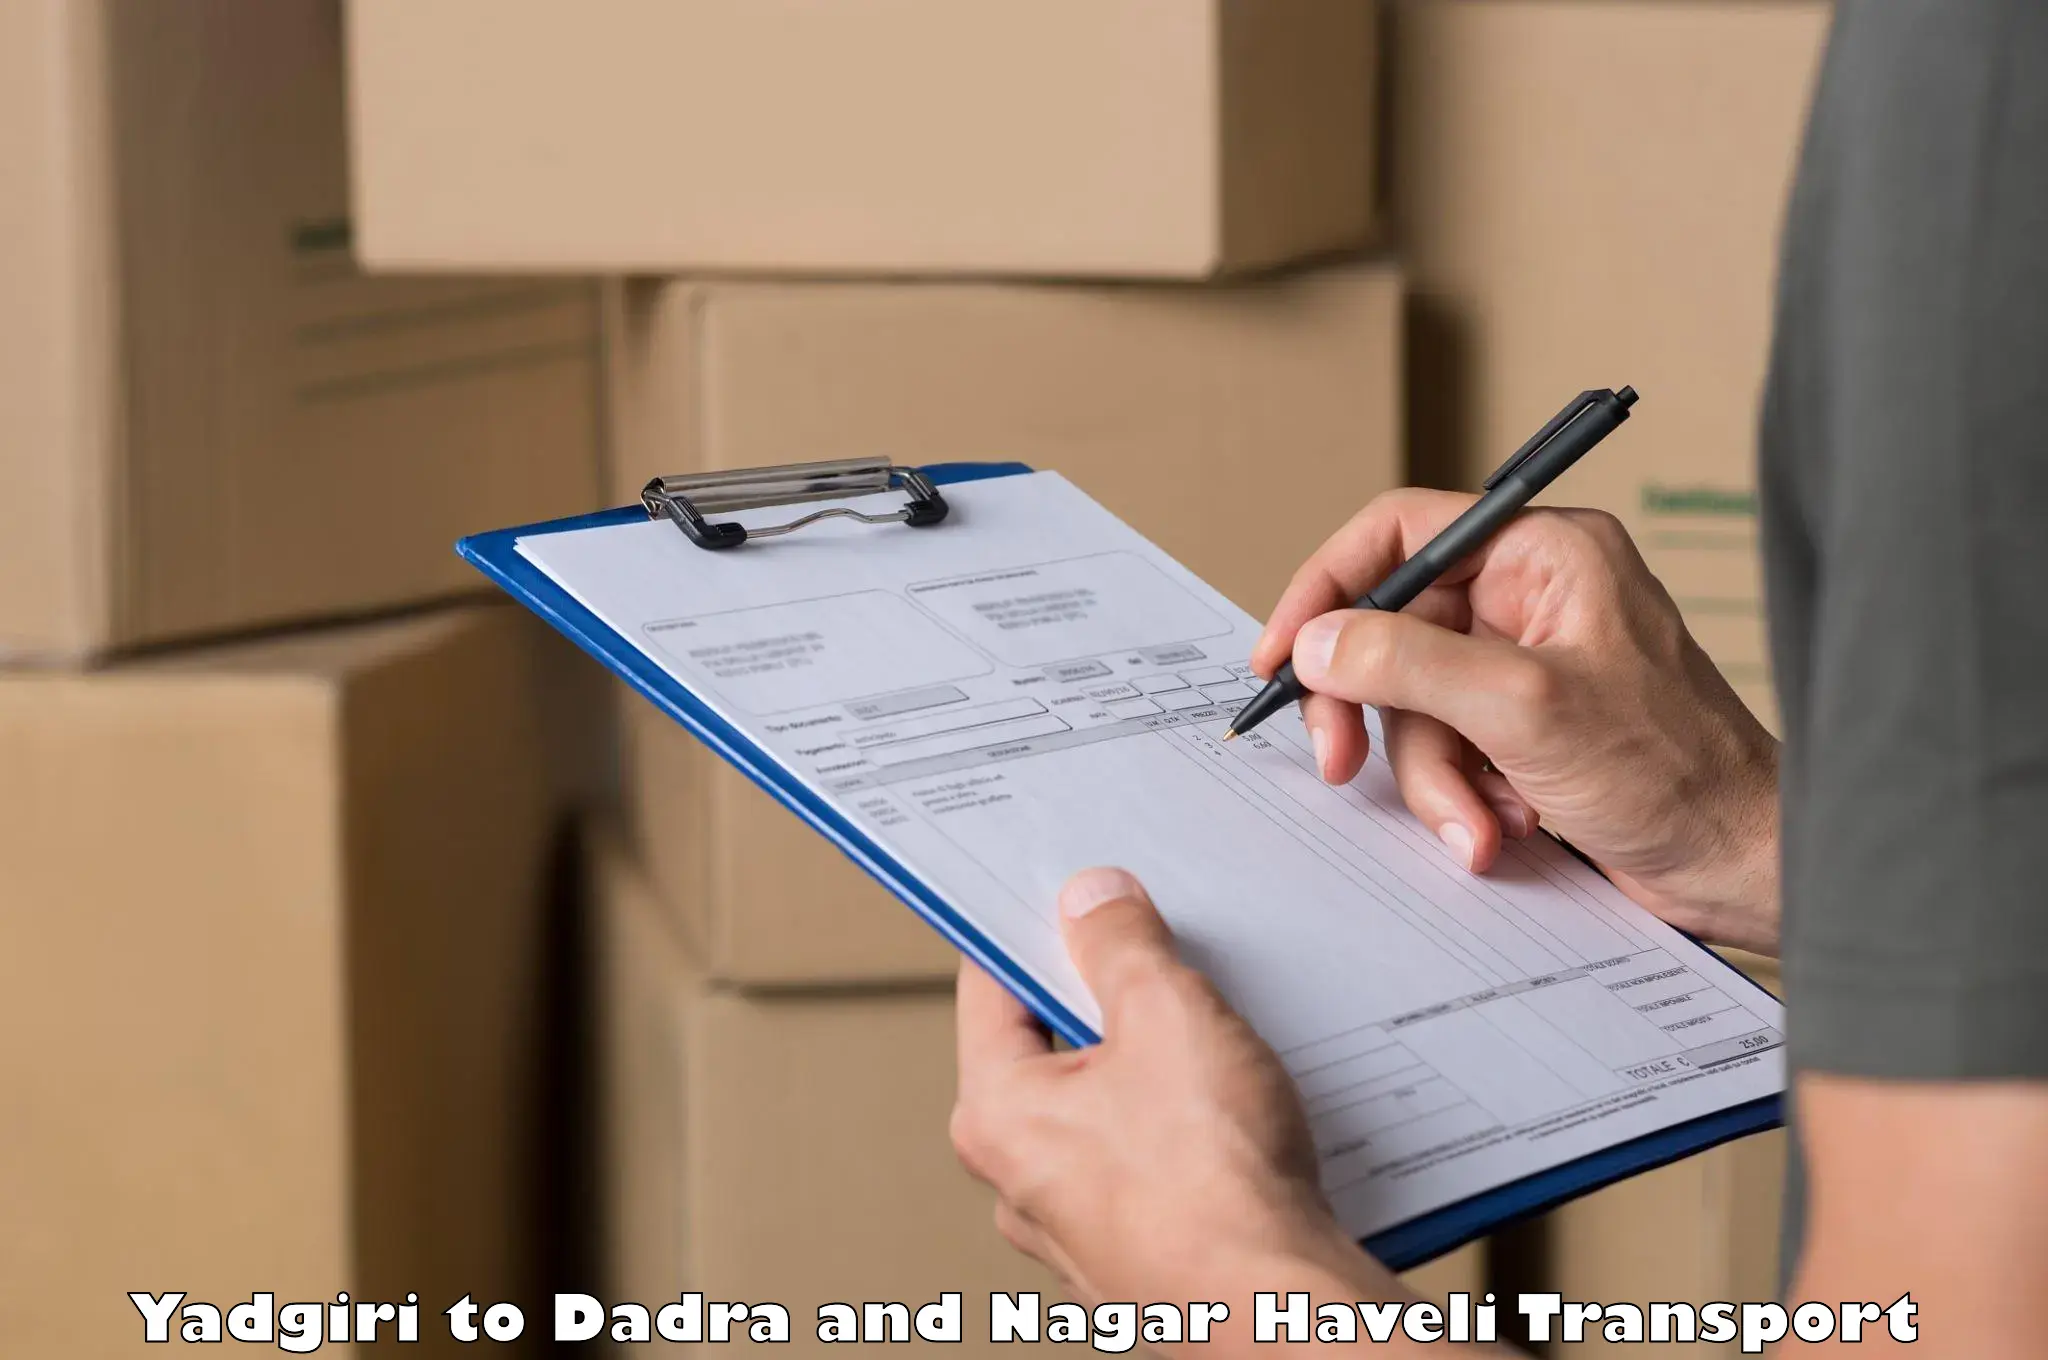 Commercial transport service Yadgiri to Dadra and Nagar Haveli